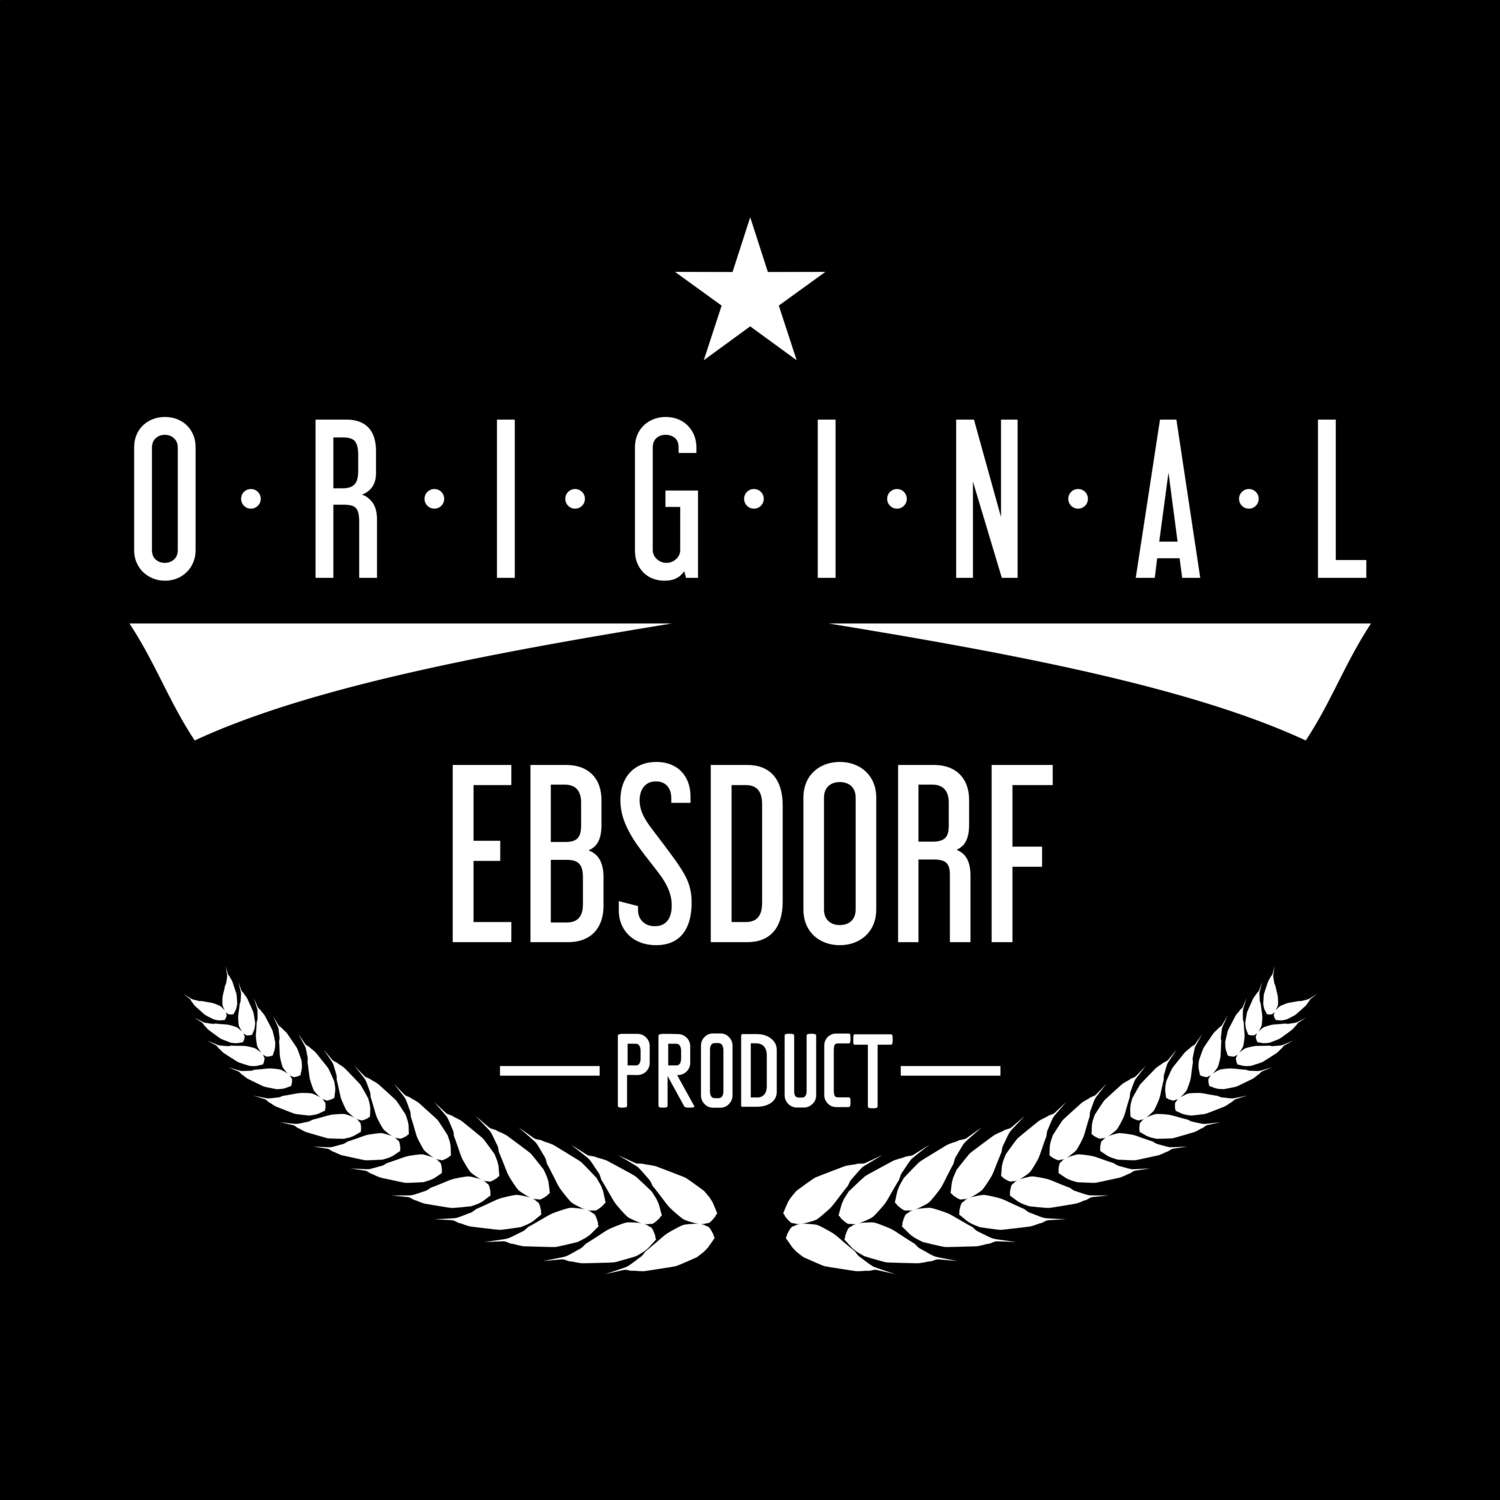 Ebsdorf T-Shirt »Original Product«